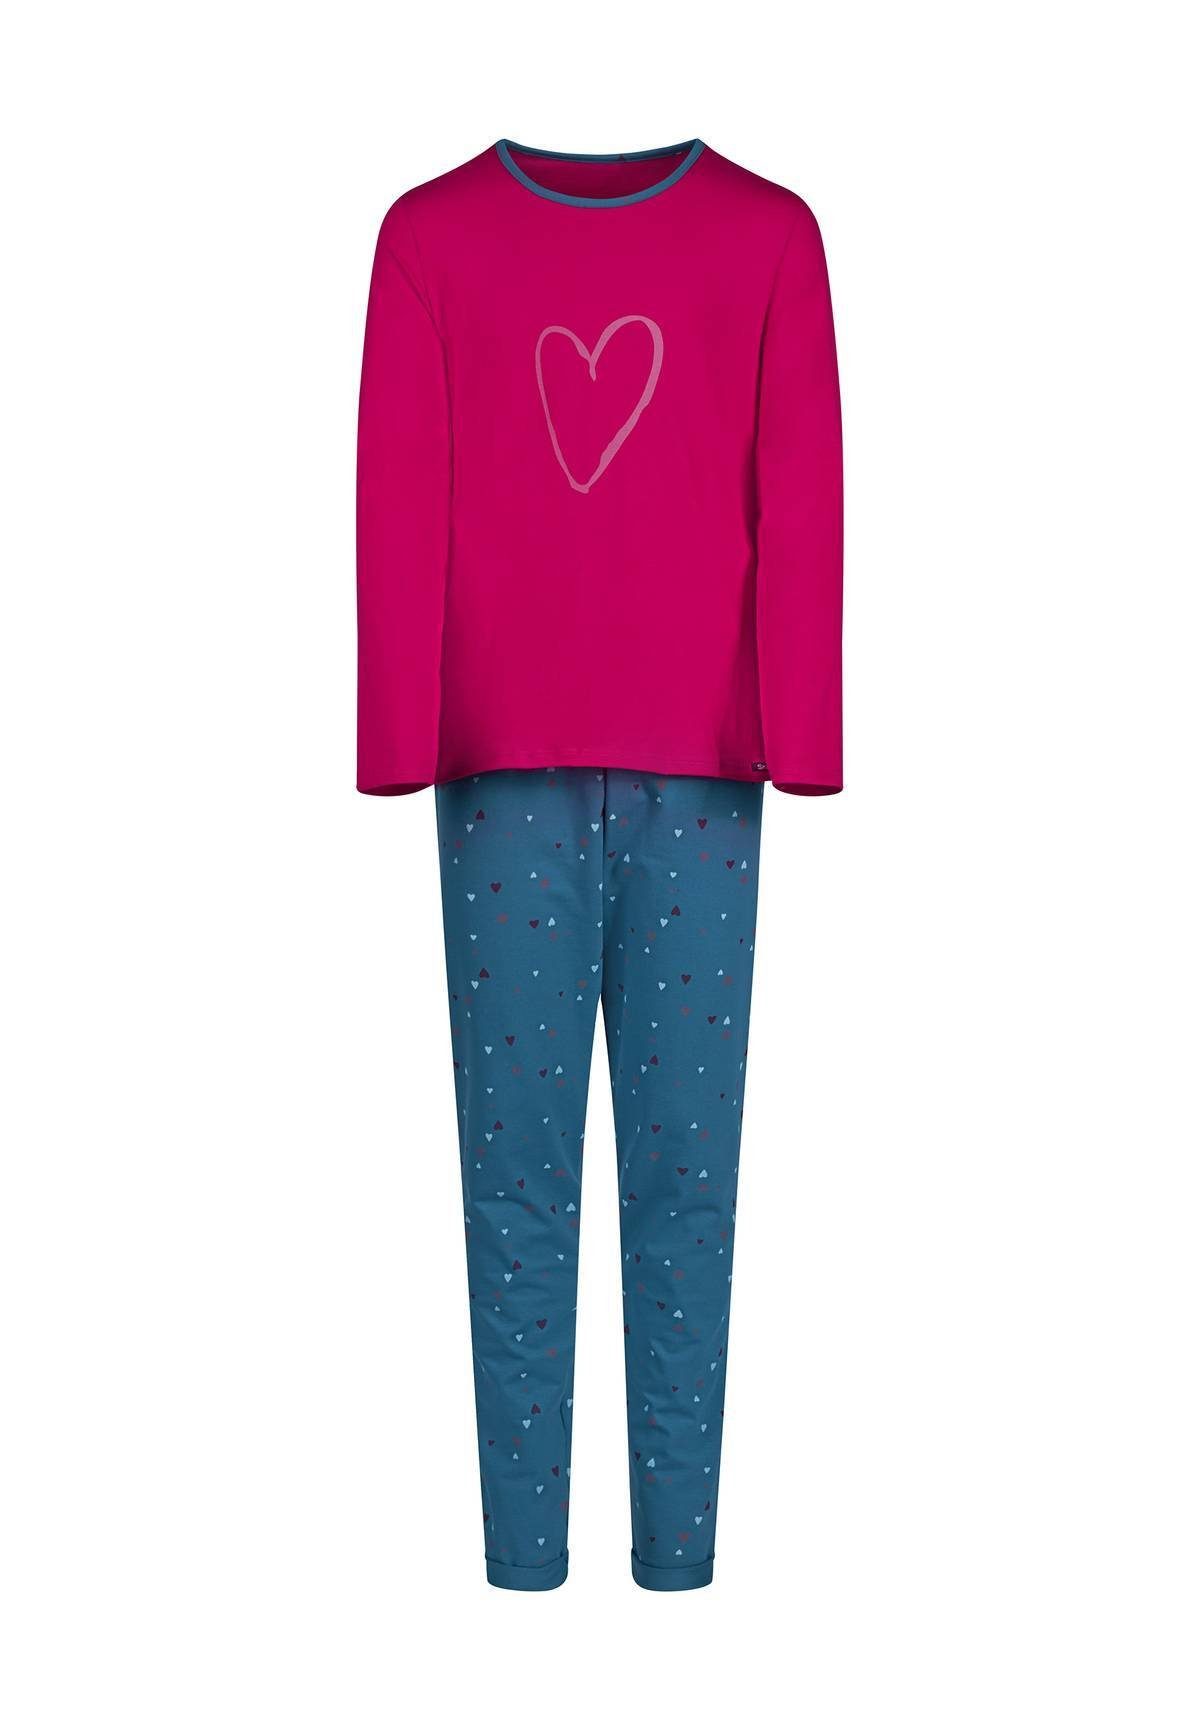 Skiny Pyjama Mädchen Schlafanzug Set - lang, Kinder, 2-tlg. Pink/Blau